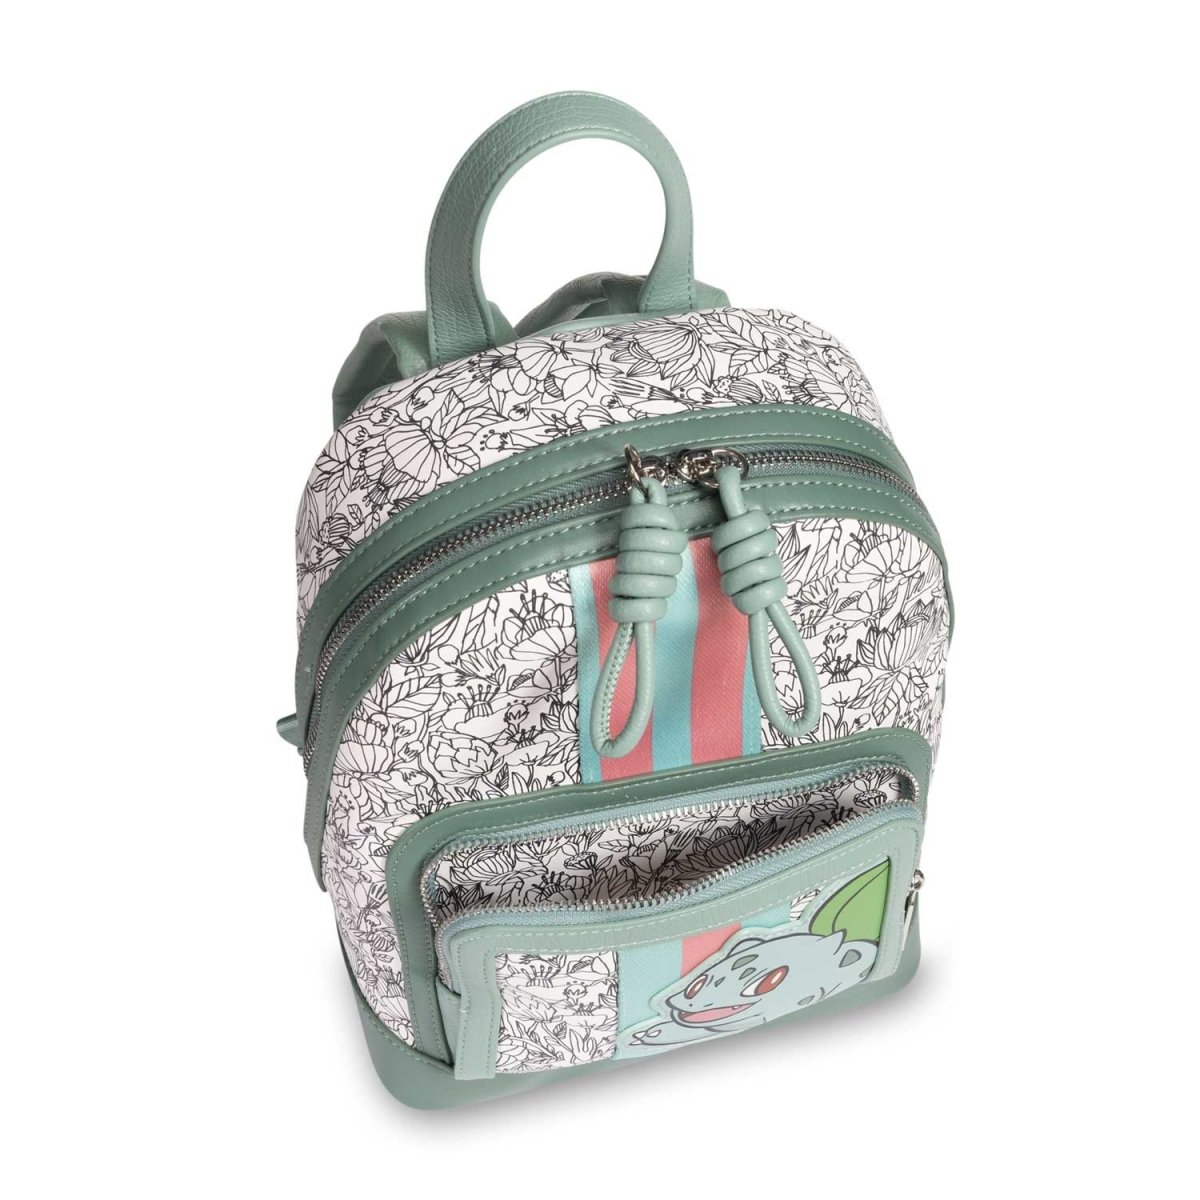 Bulbasaur Mini Backpack